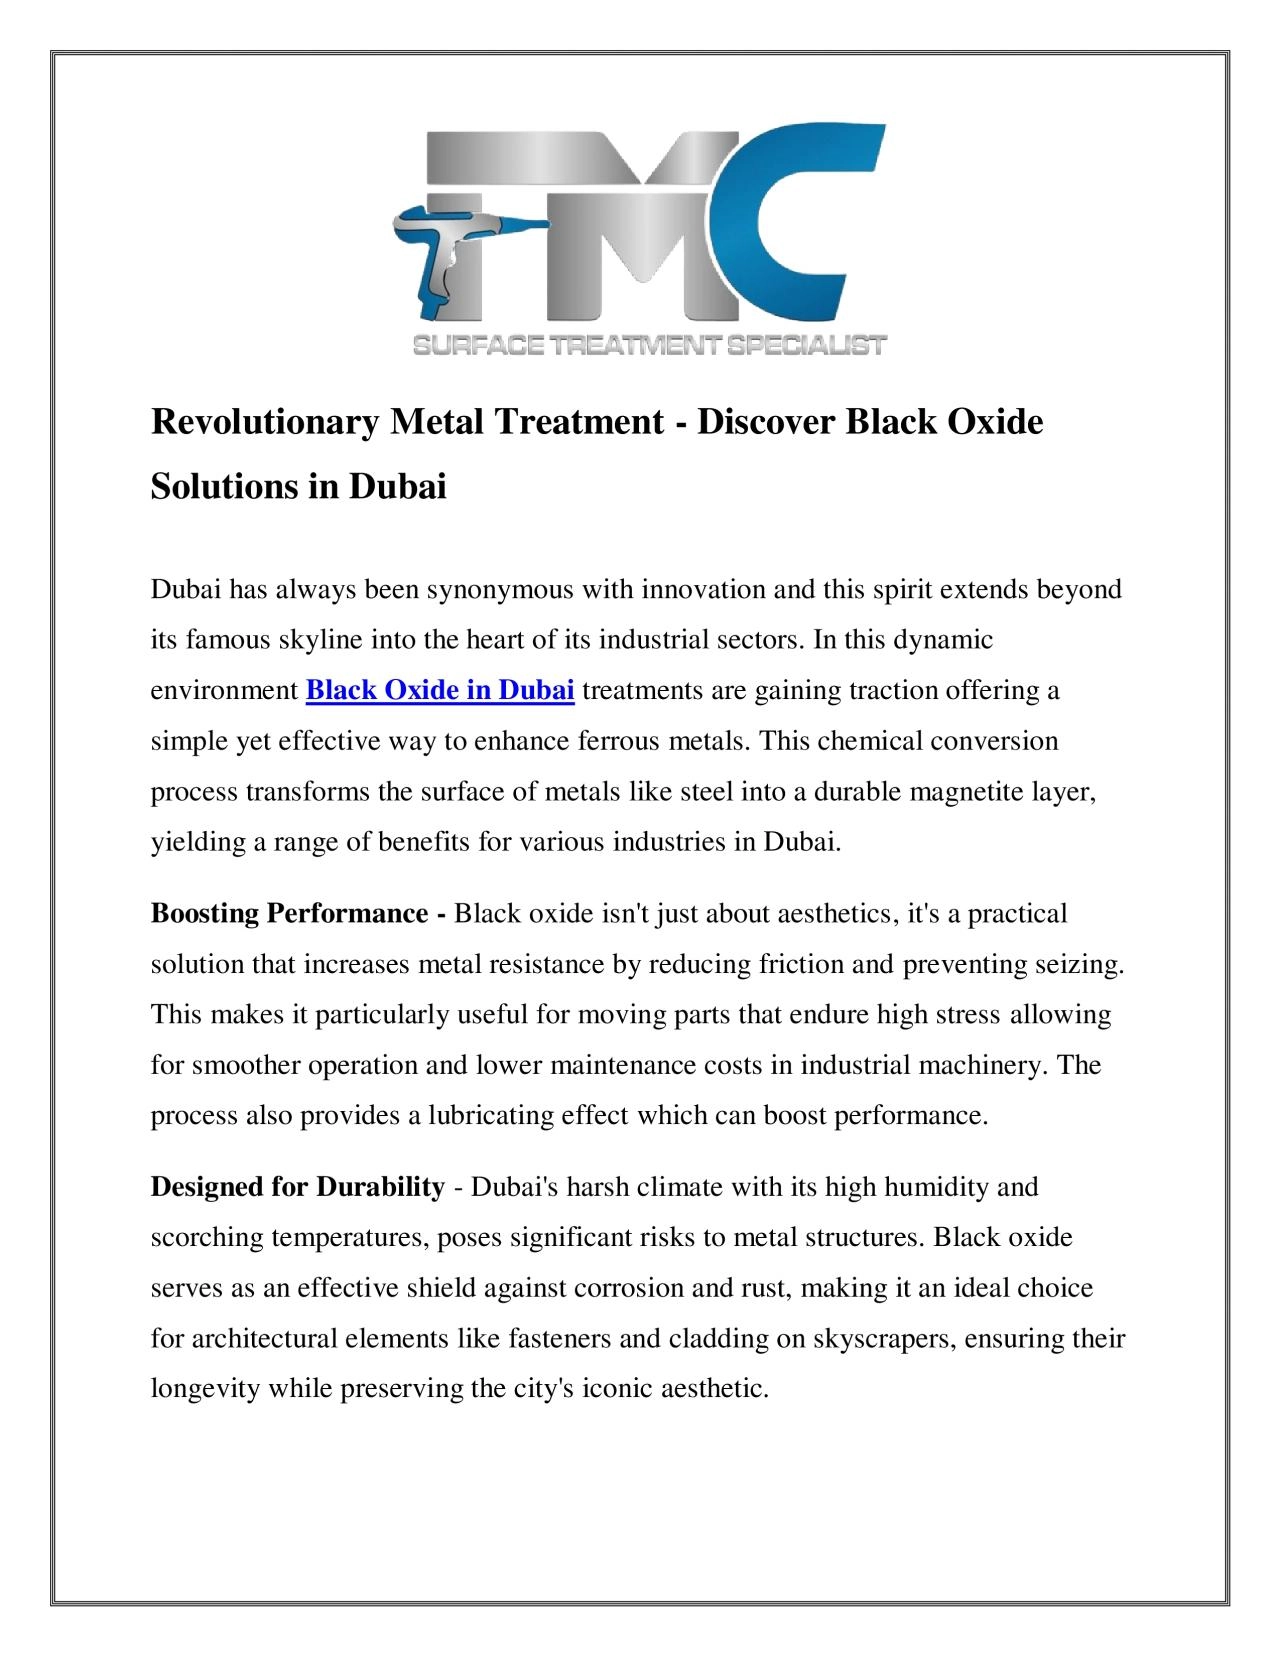 Revolutionary Metal Treatment - Discover Black Oxide Solutions in Dubai